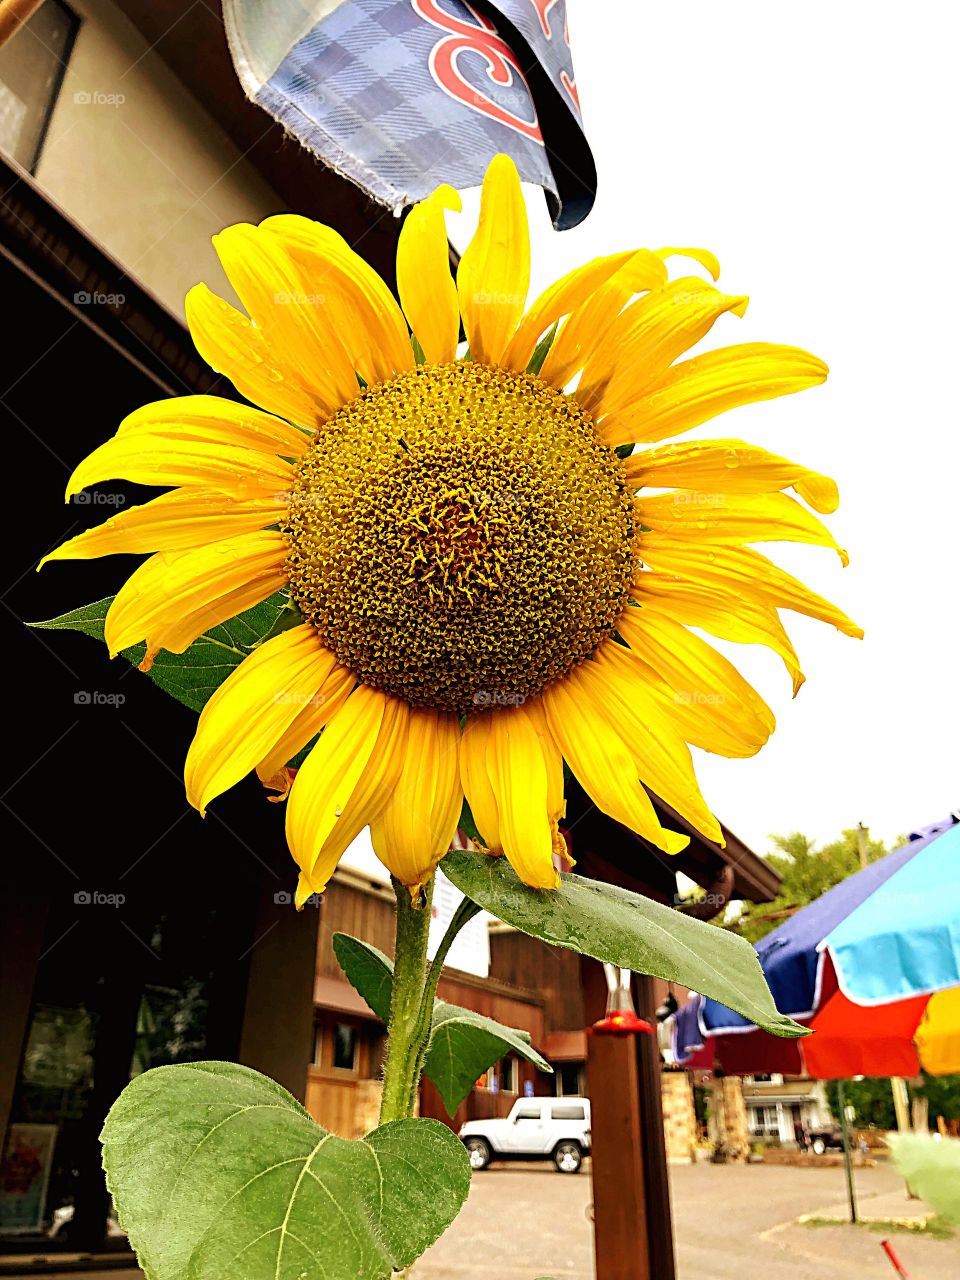 City sunflower 